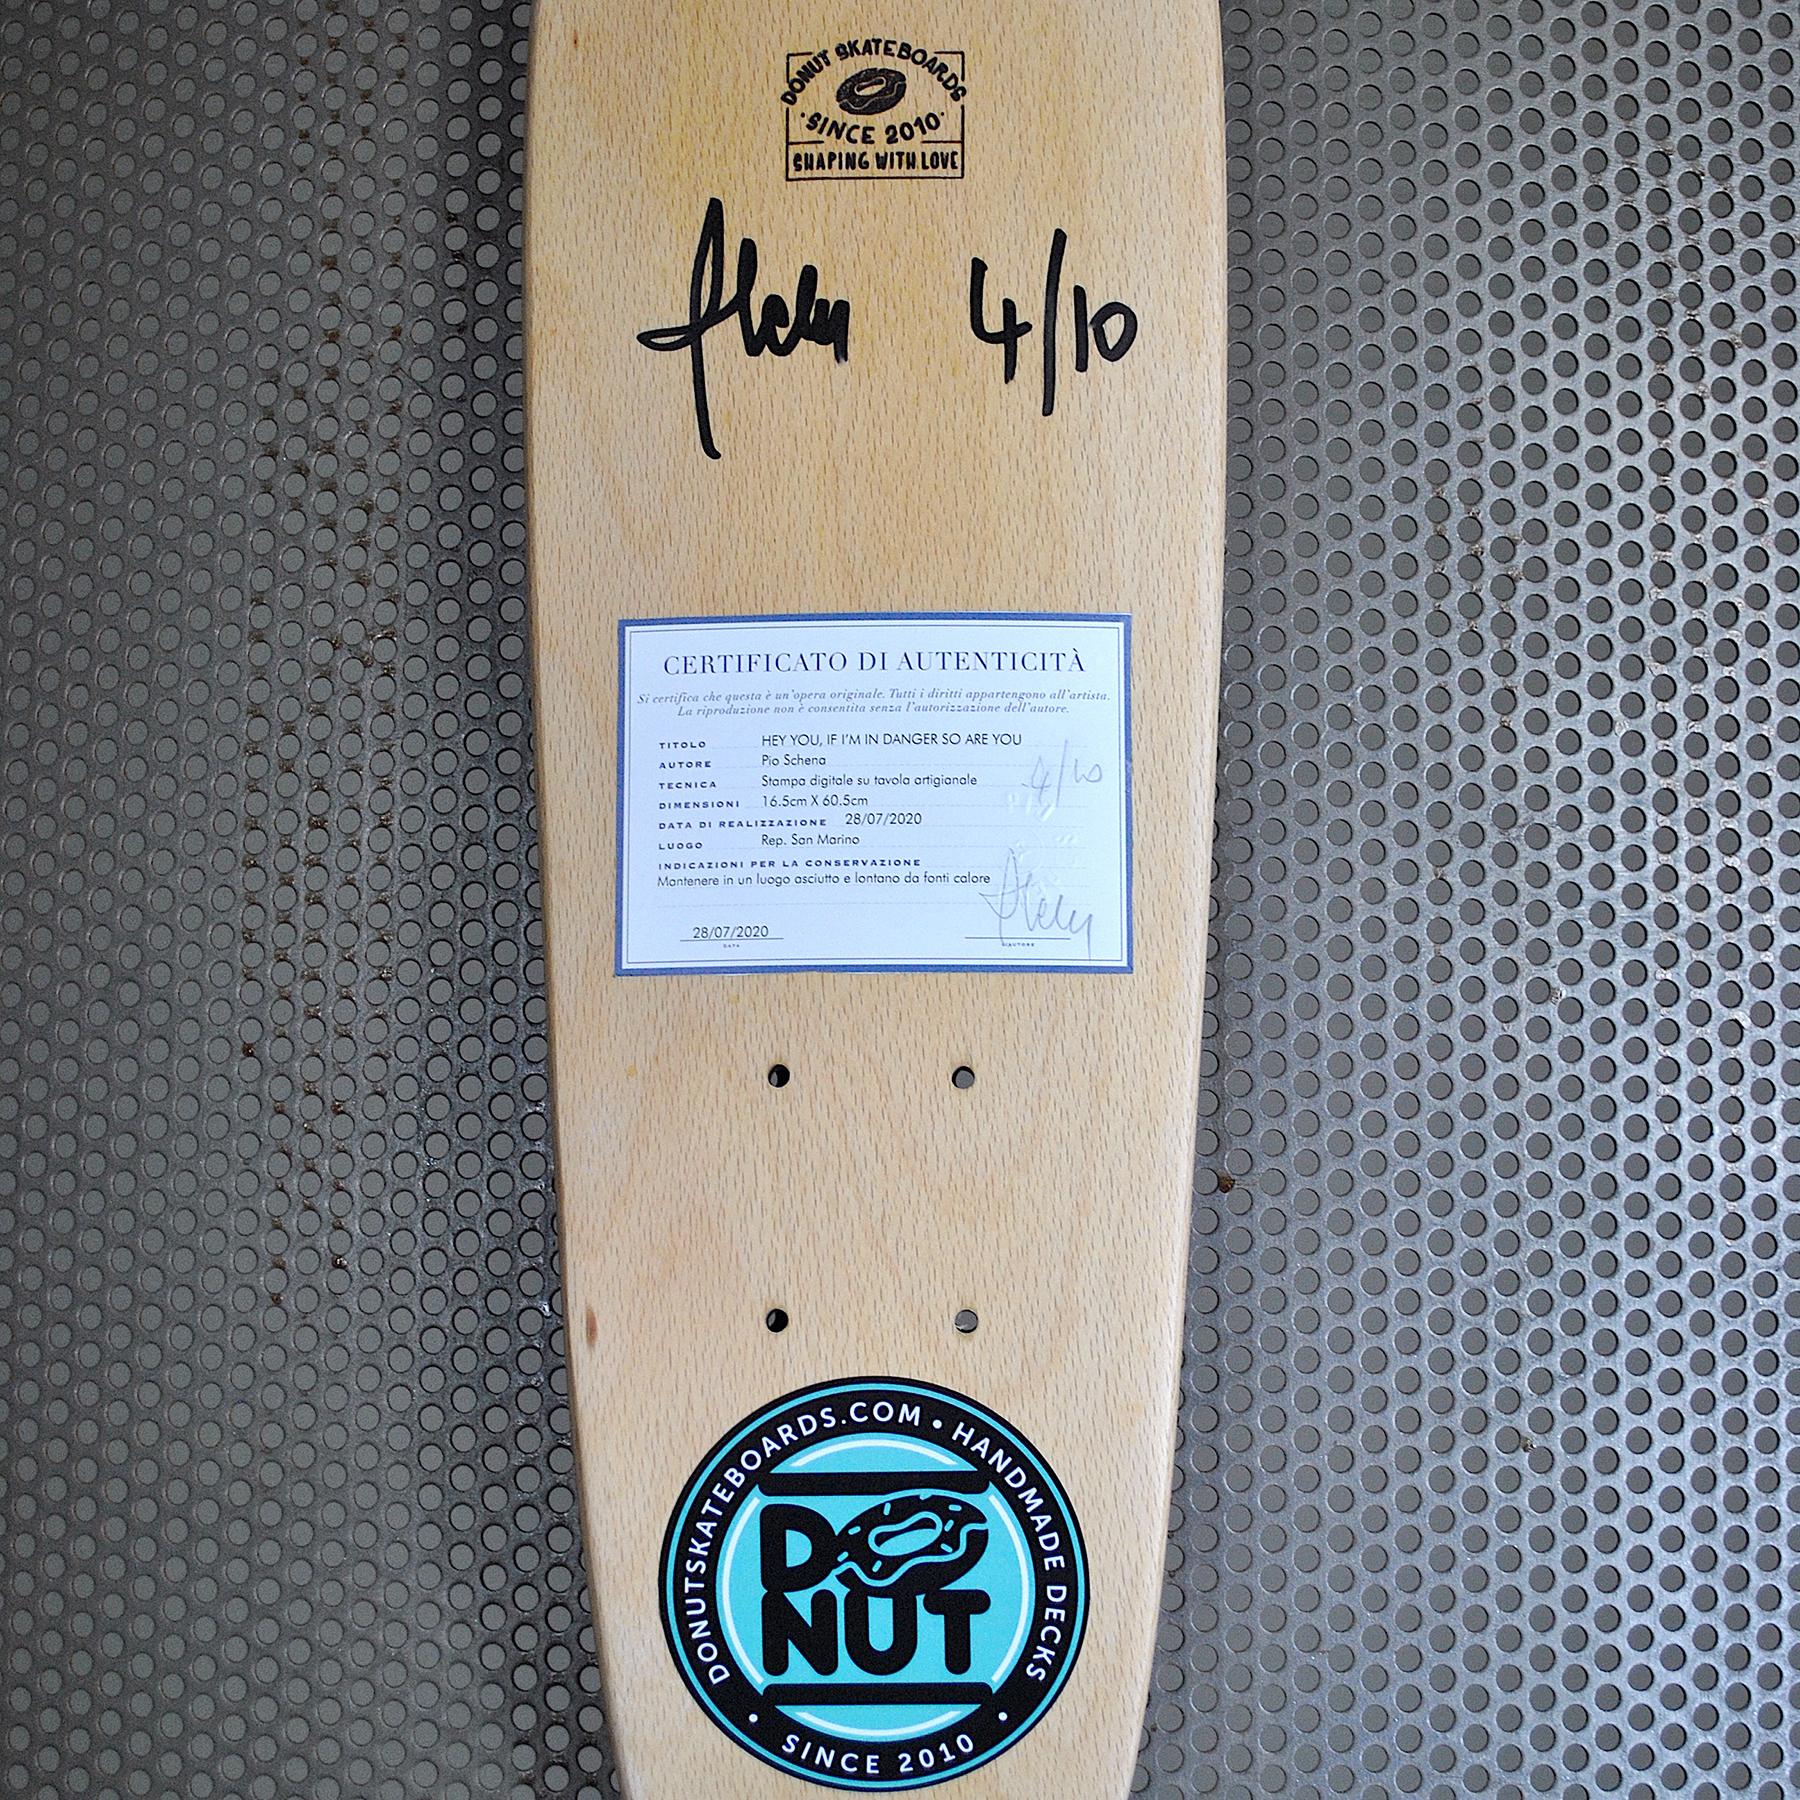 Wood Skate Deck Handmade Limited Edition by Pio Schena